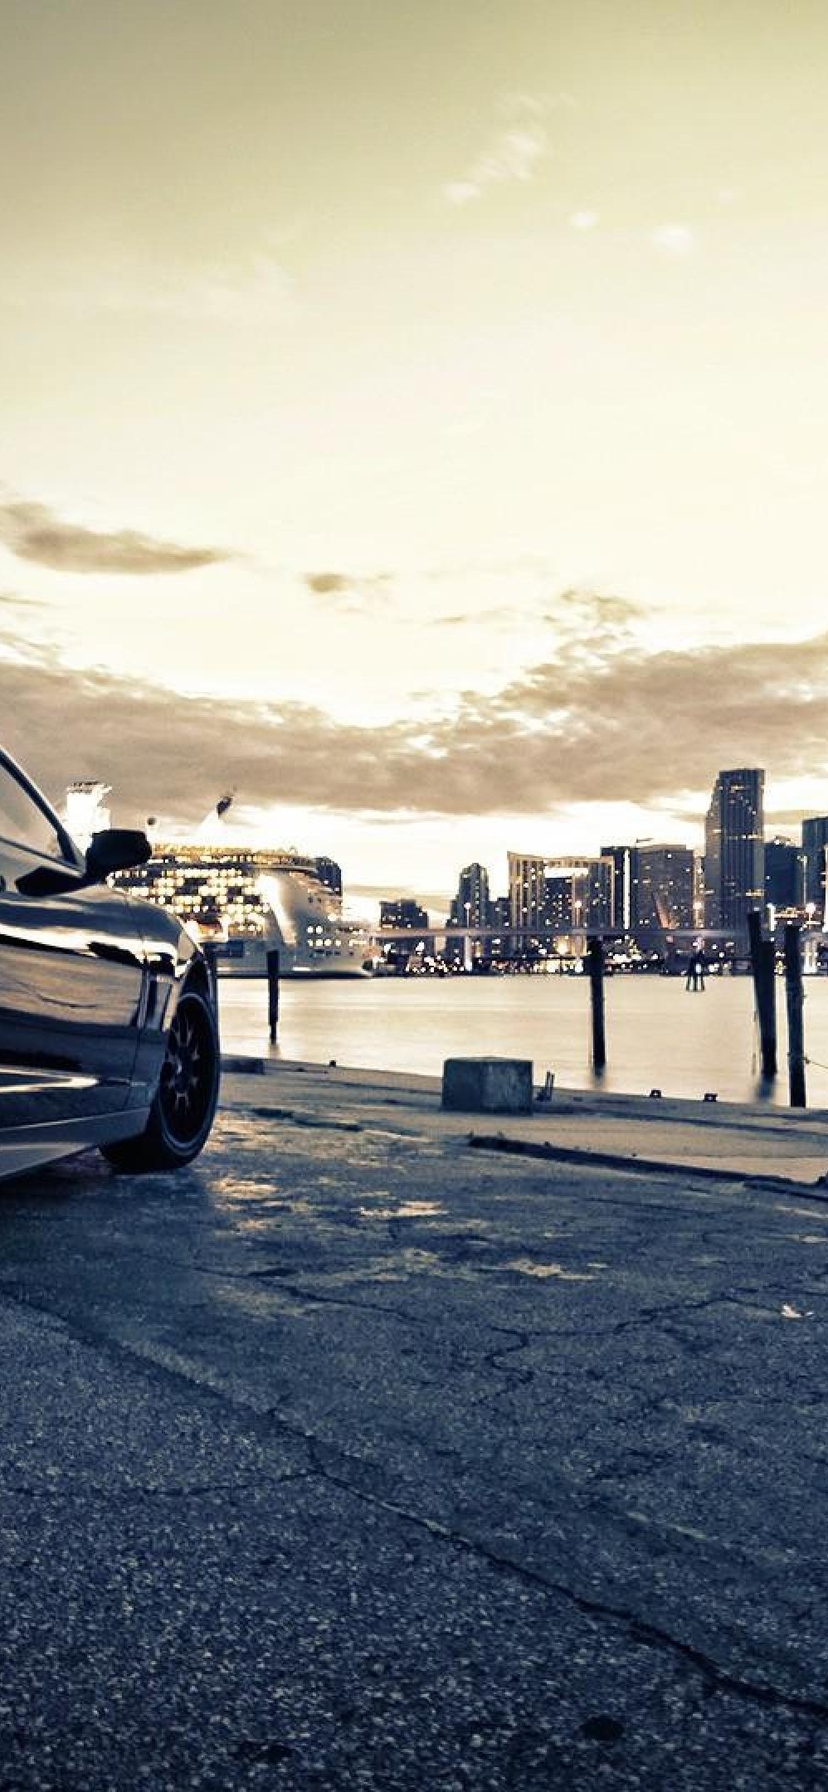 Image: Chevrolet Camaro, dark, stop lights, city, skyscrapers, buildings, river, embankment, gray sky